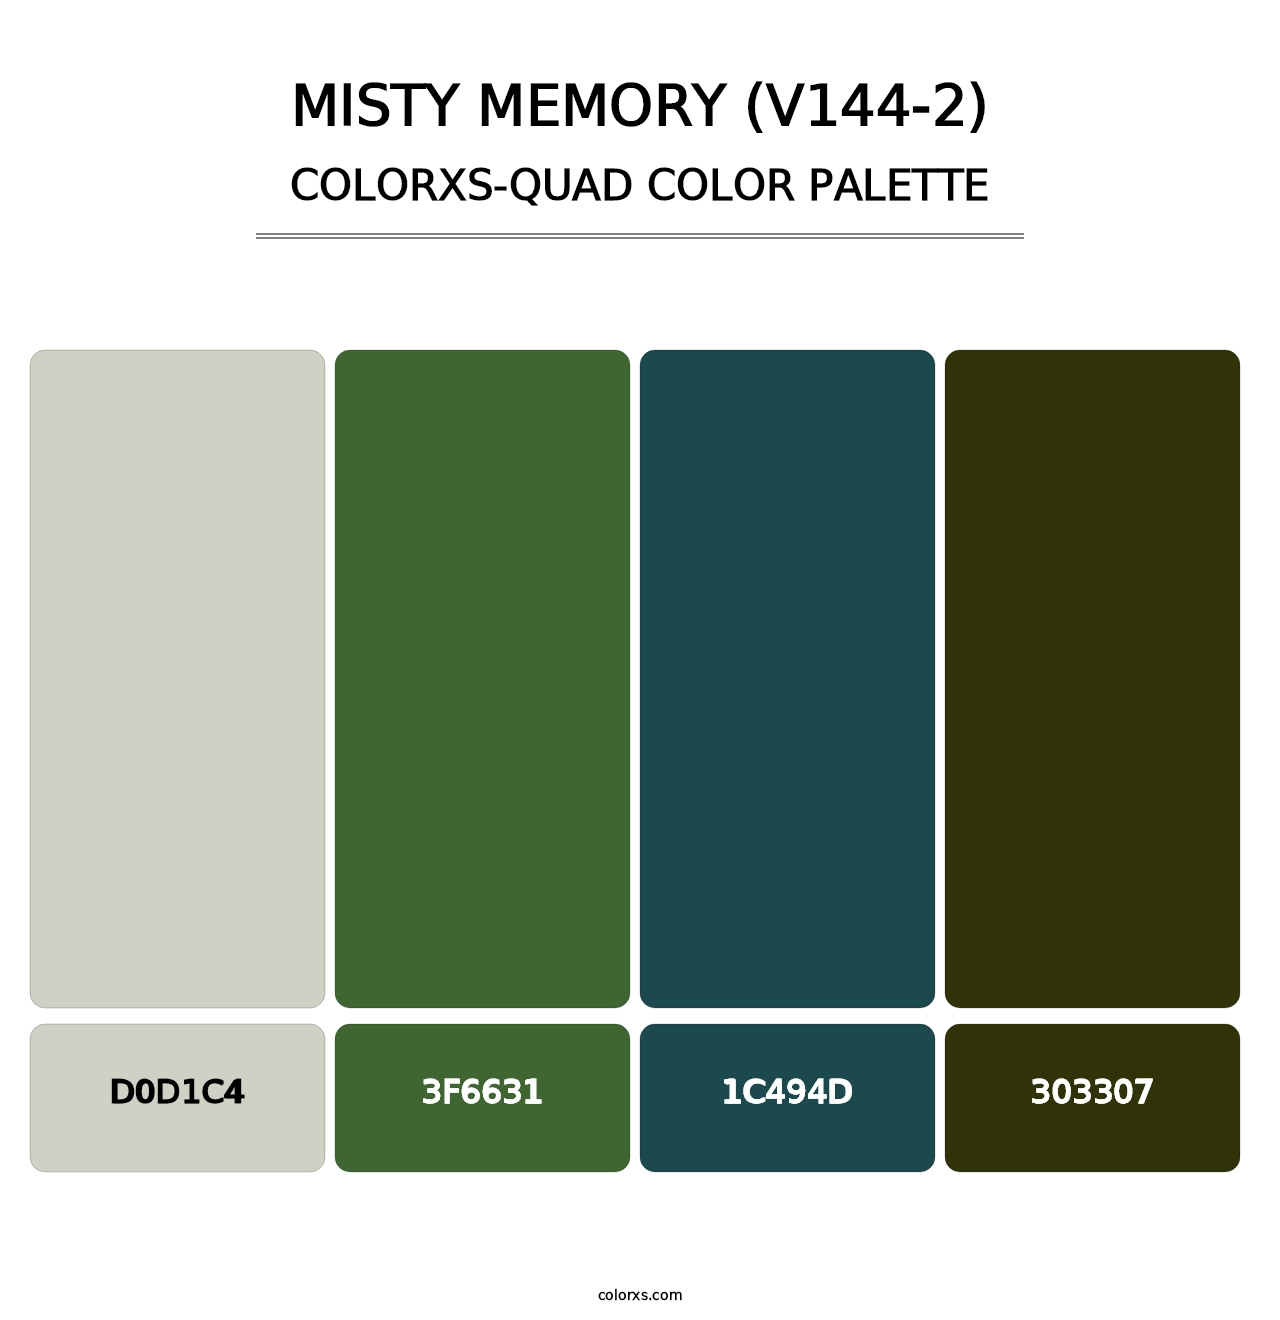 Misty Memory (V144-2) - Colorxs Quad Palette